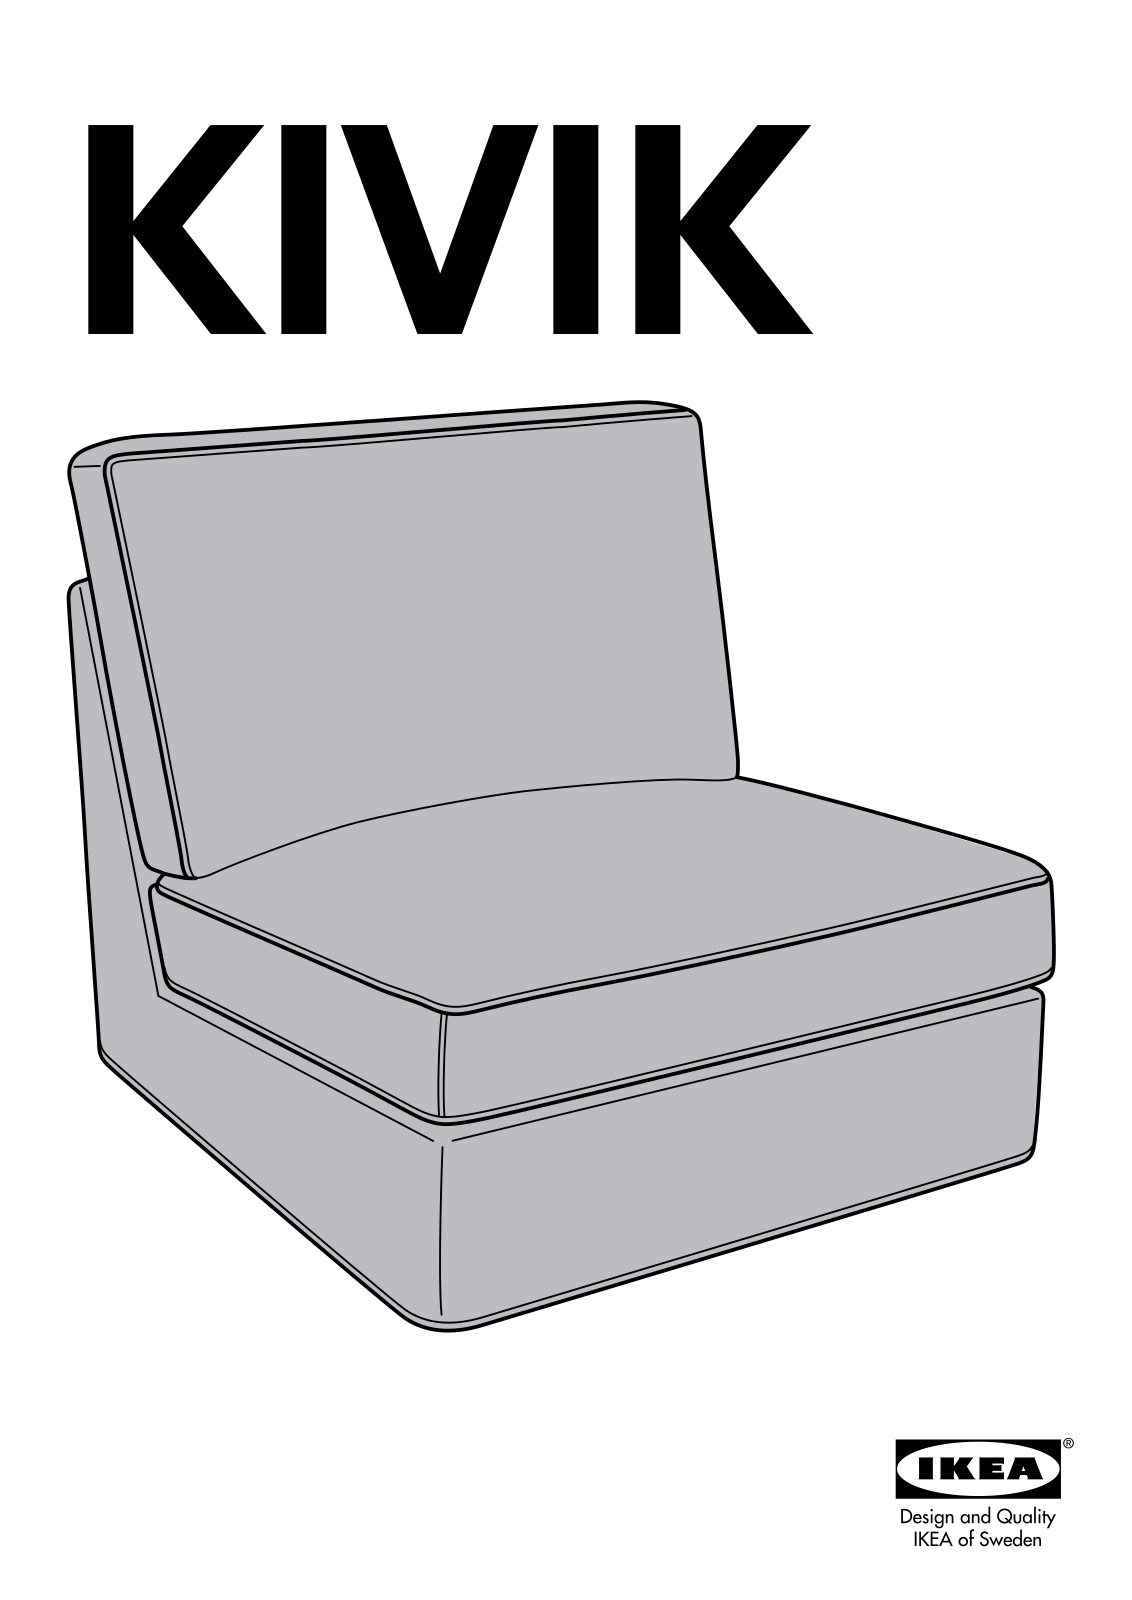 IKEA KIVIK User Manual